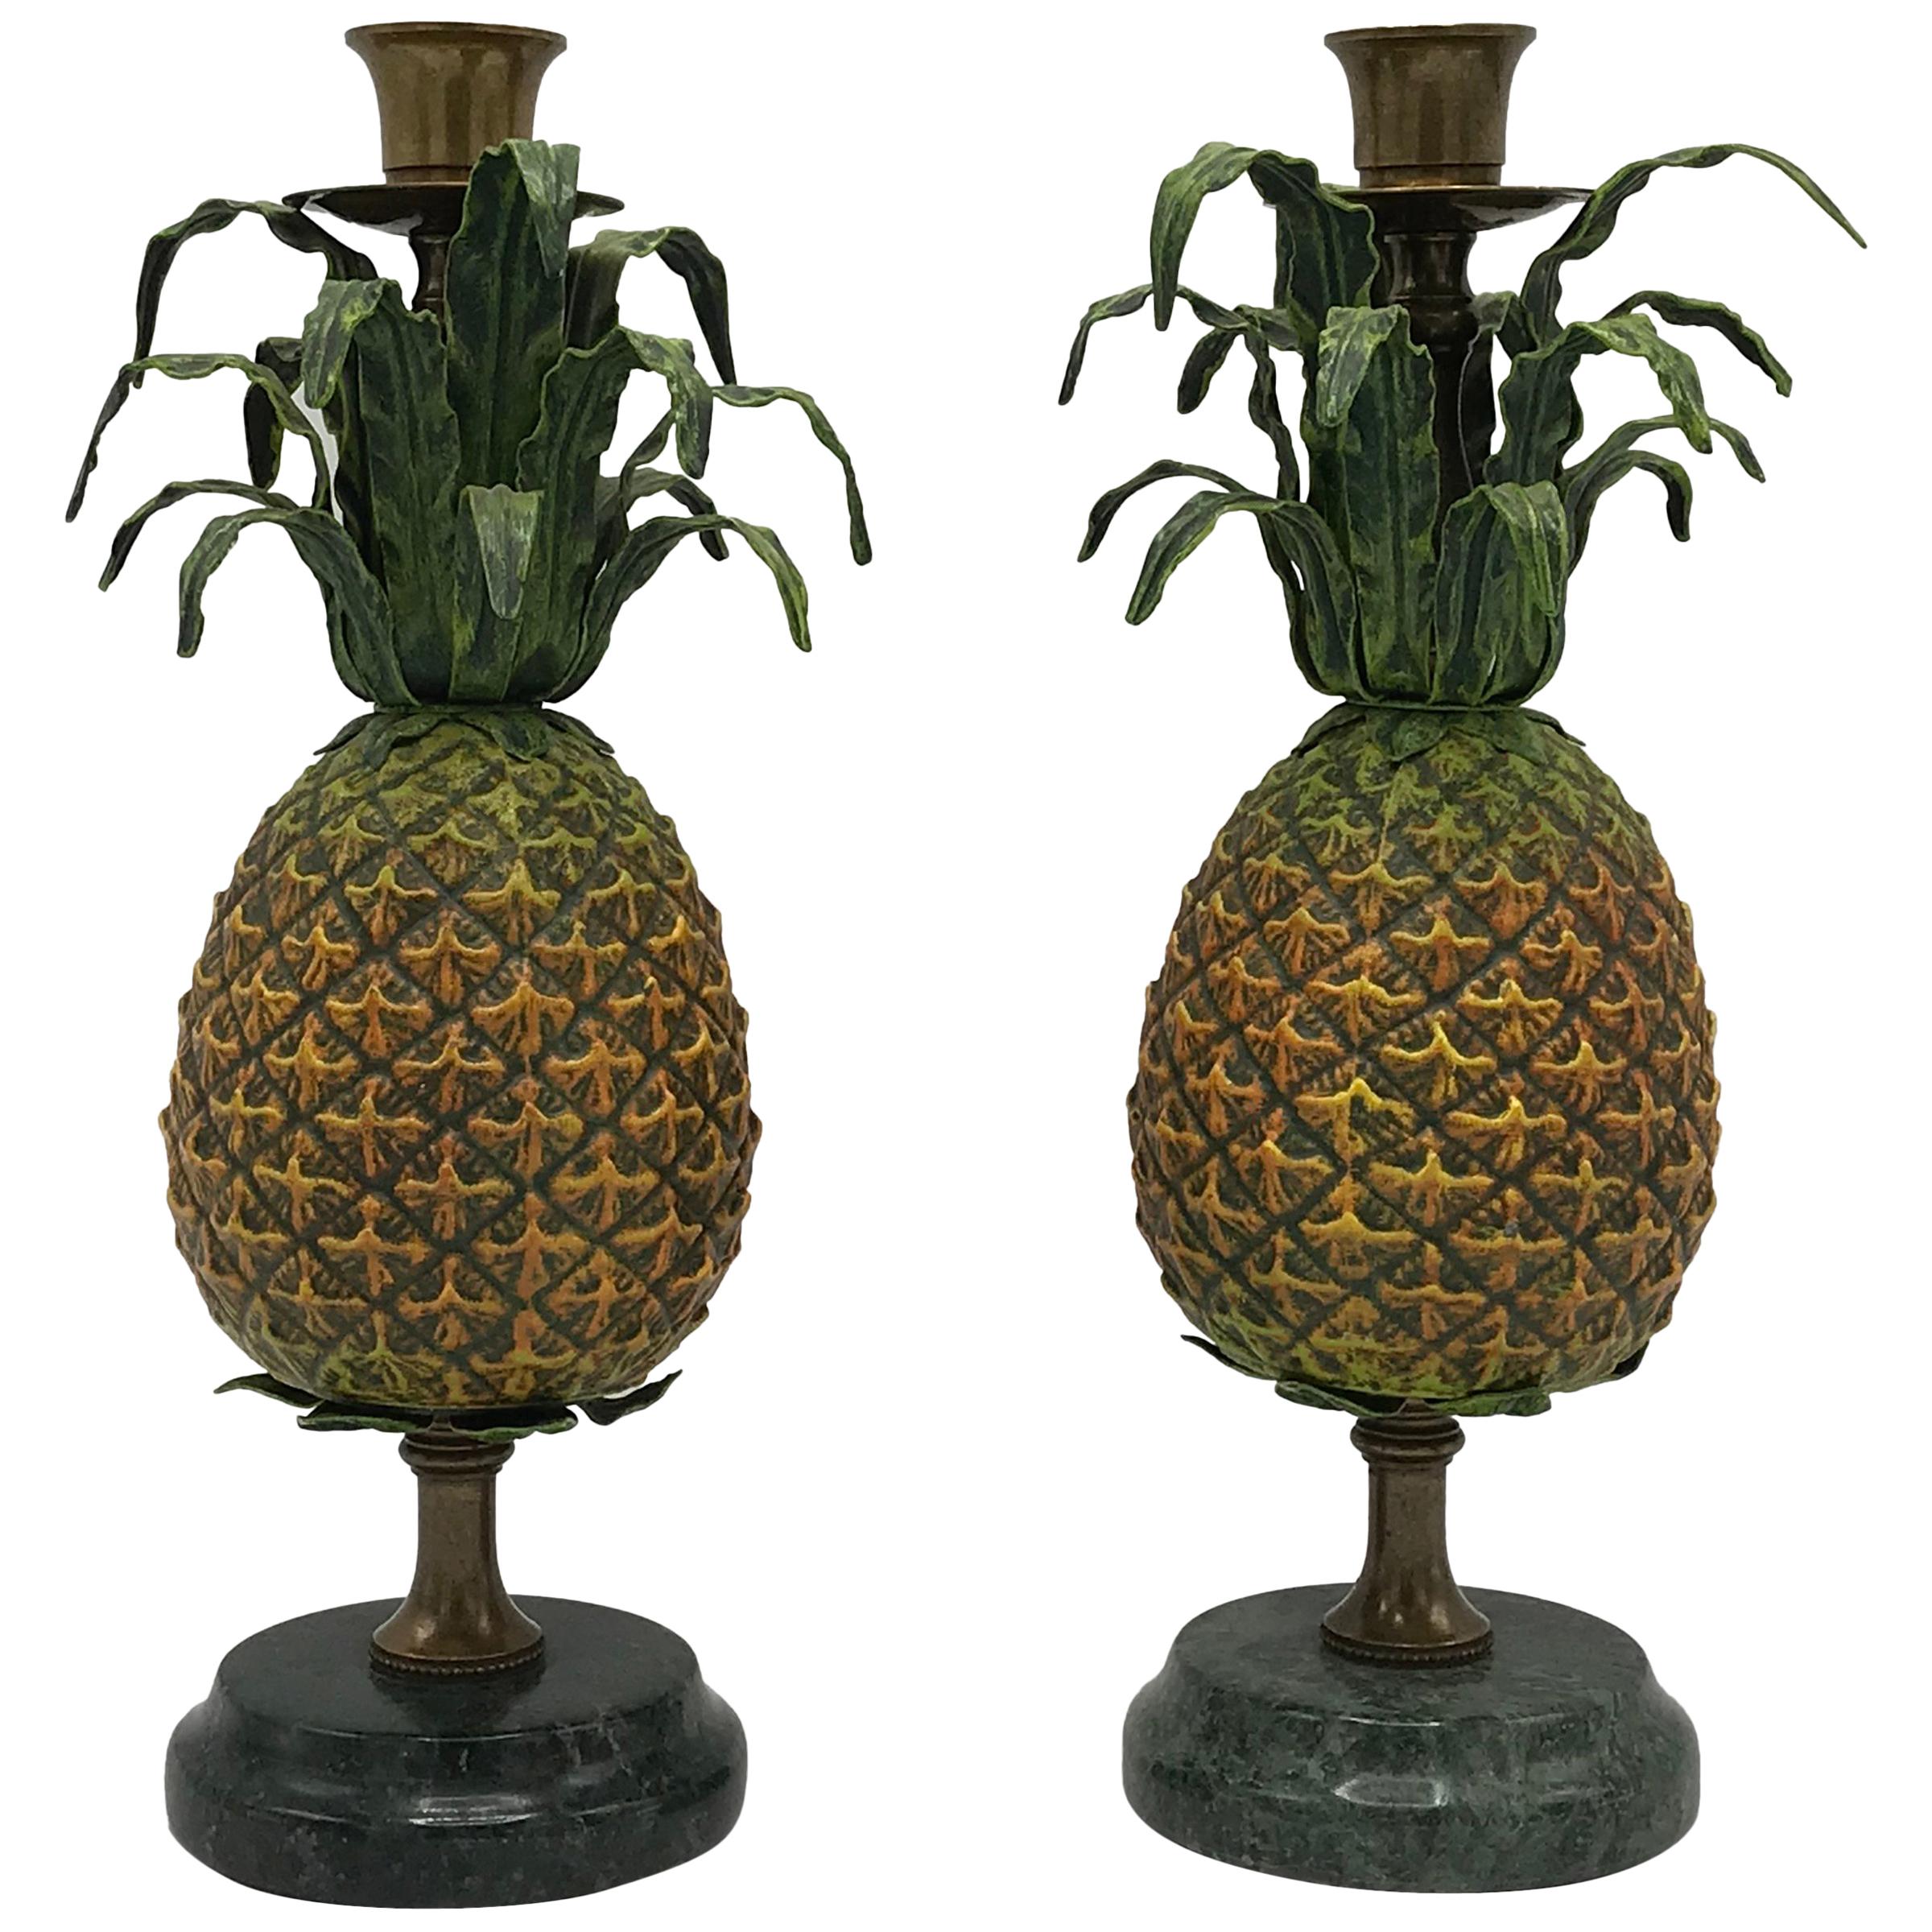 1980s Italian Tole Pineapple Sculpture Candlesticks, Pair